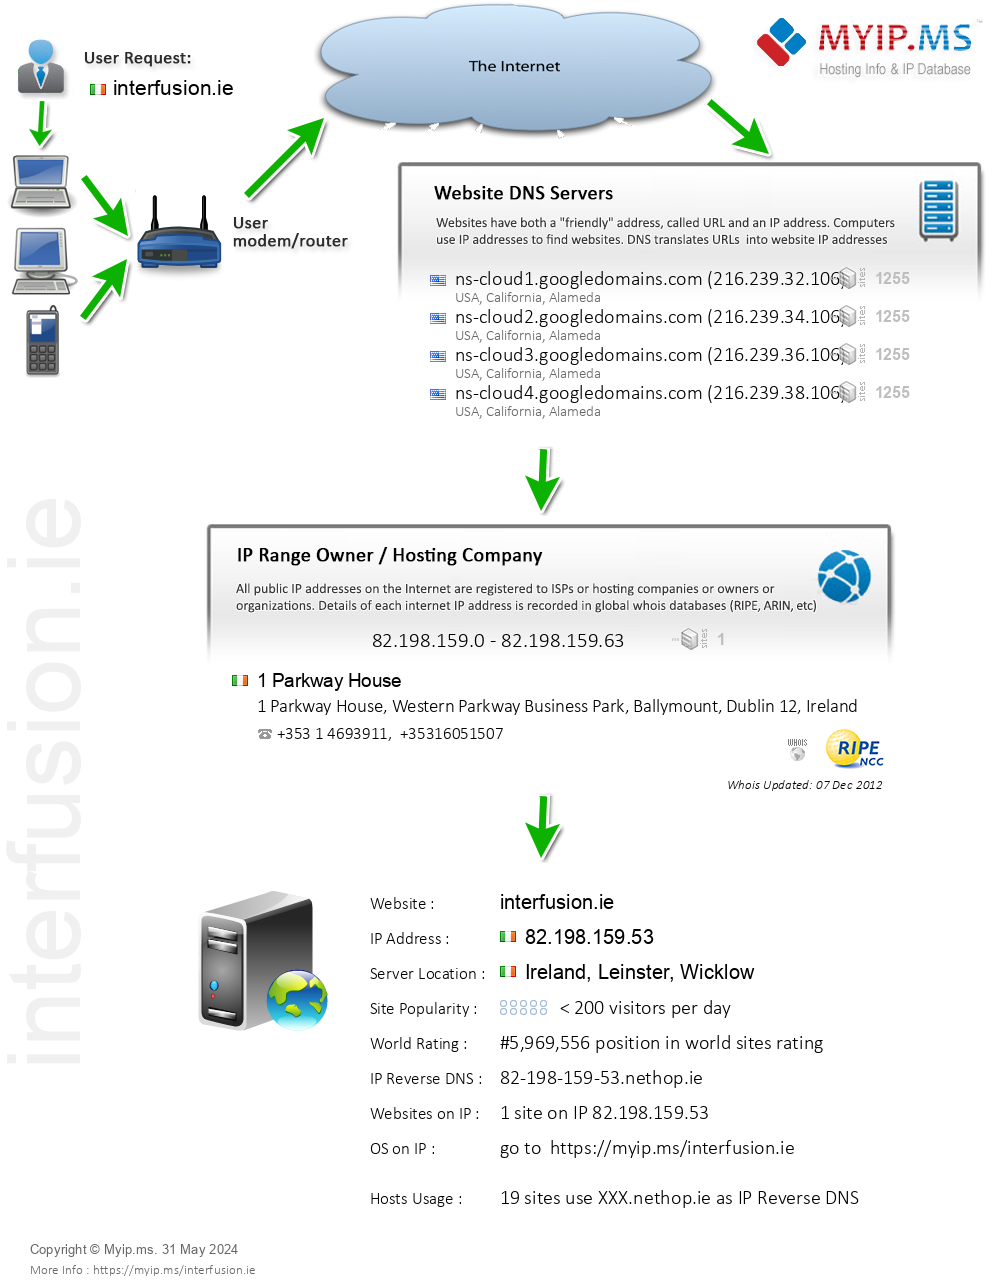 Interfusion.ie - Website Hosting Visual IP Diagram